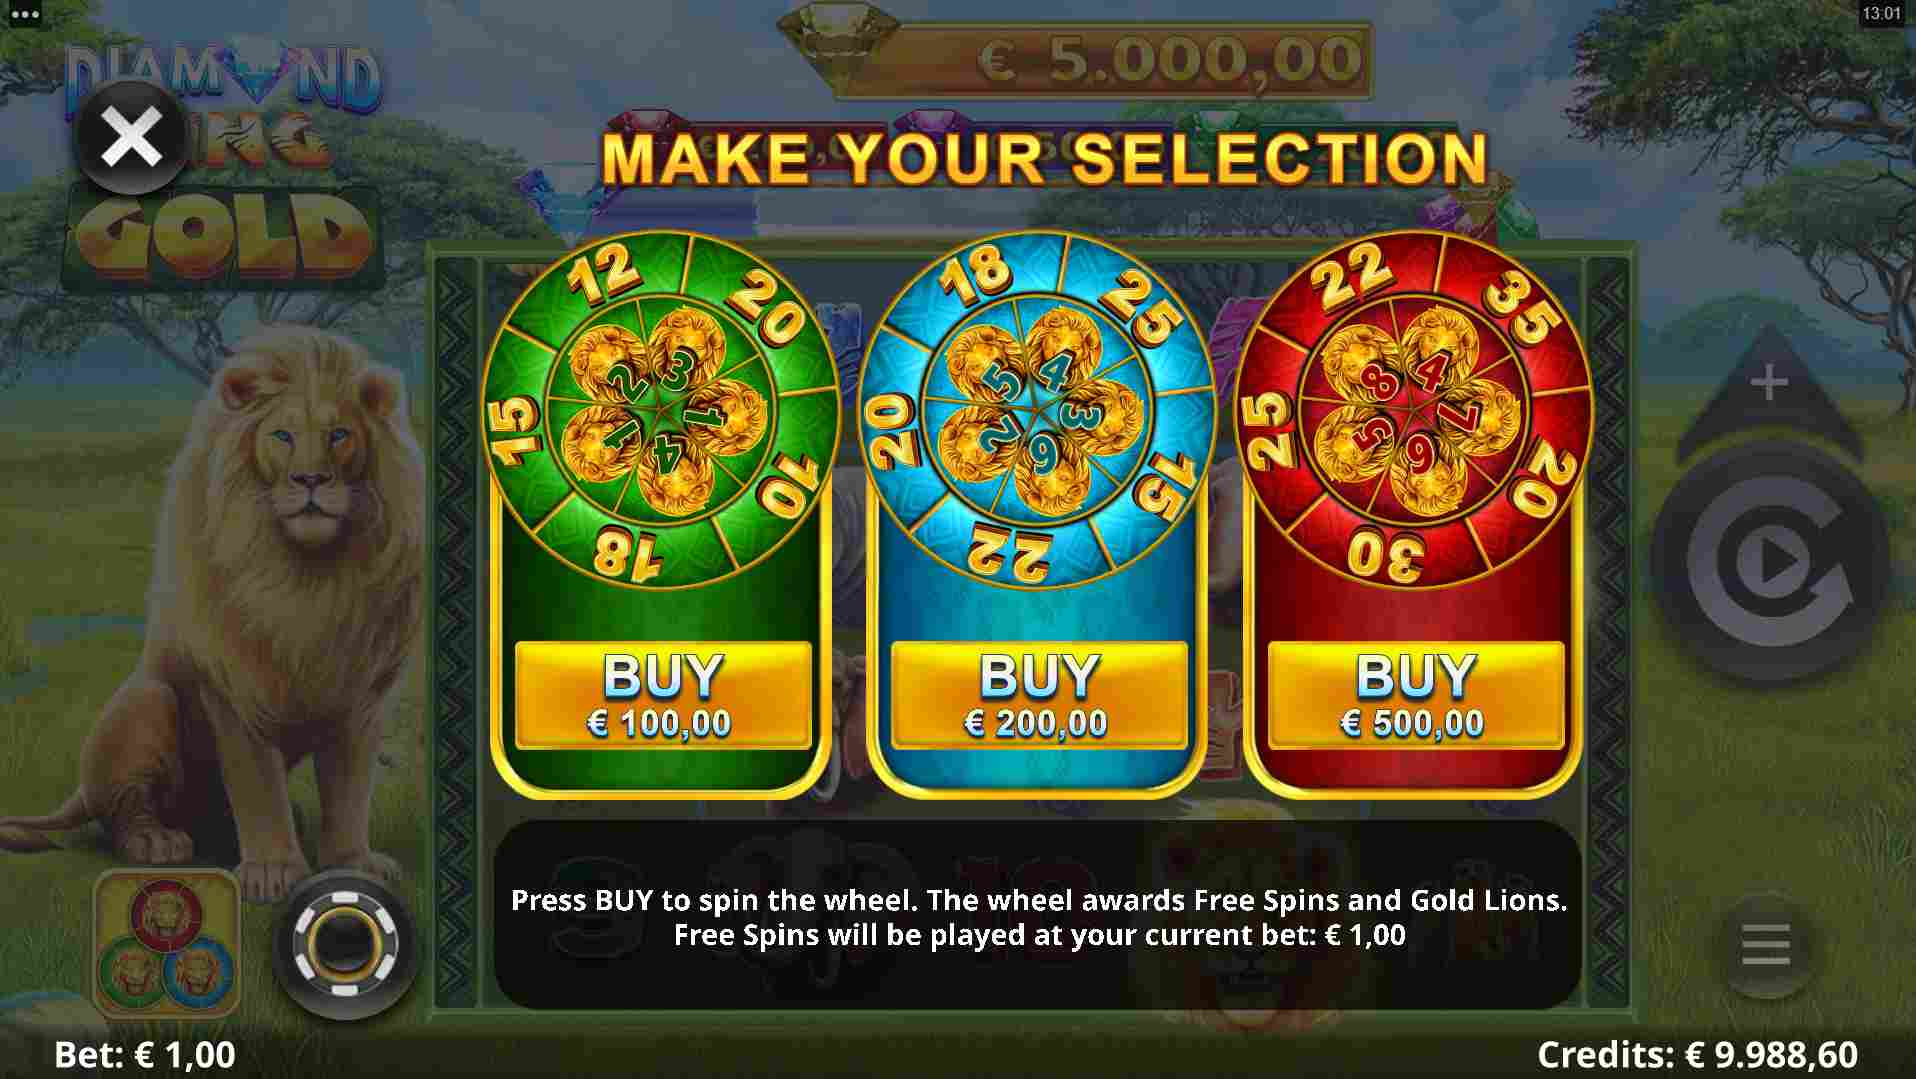 Diamond King Gold Bonus Buy Options